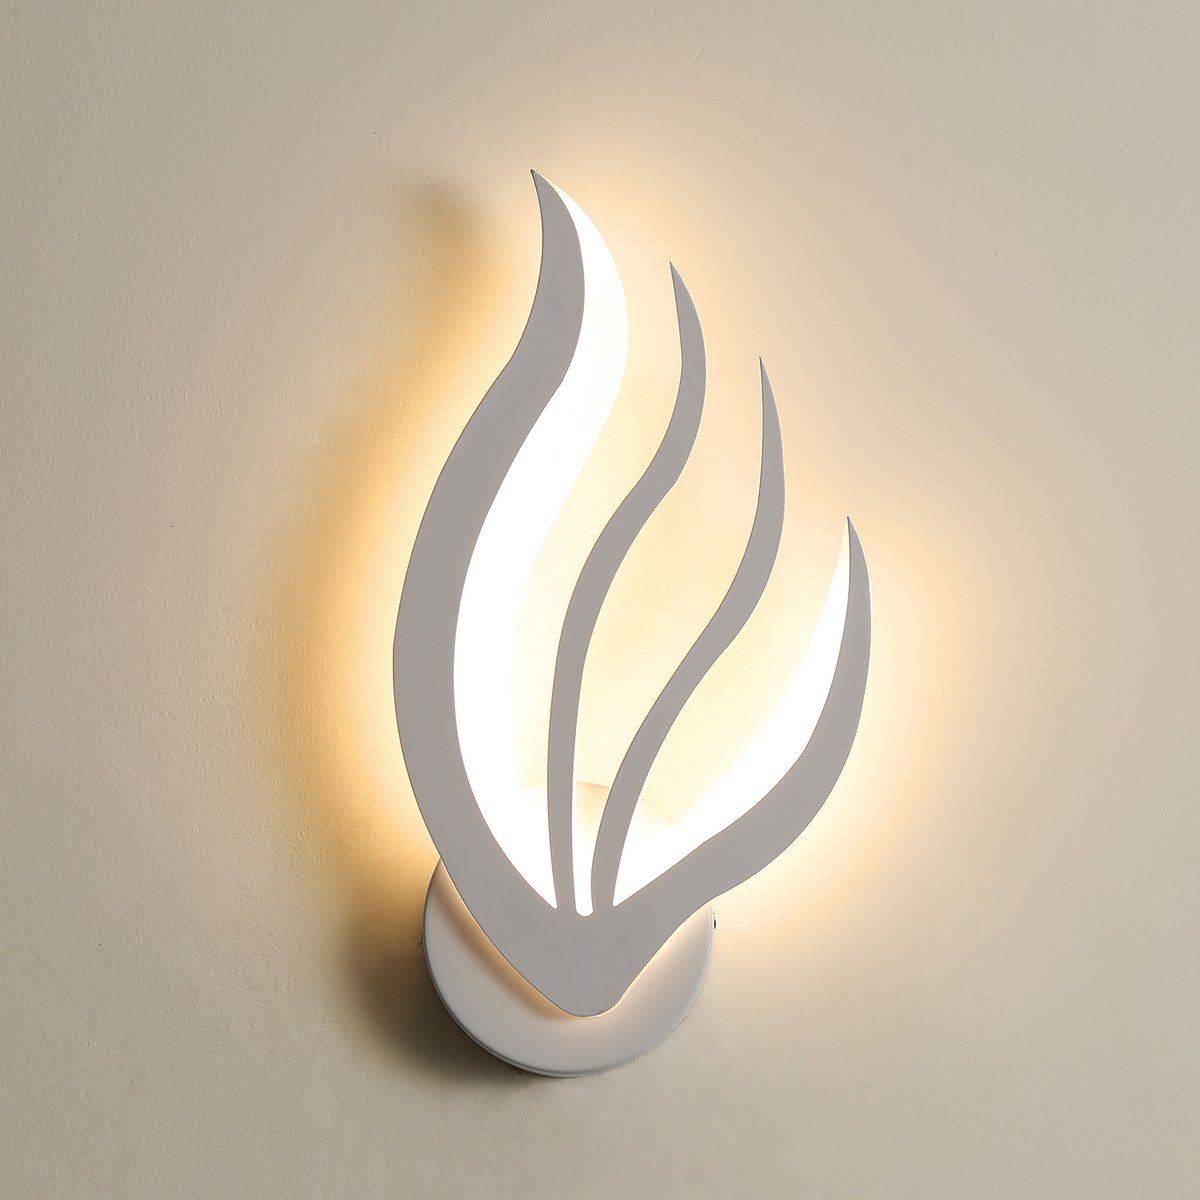 Delaveek-Moderne LED Wandlamp-15W 1690LM-3000K Warm Wit-Witte Vlam Vorm Wandlamp